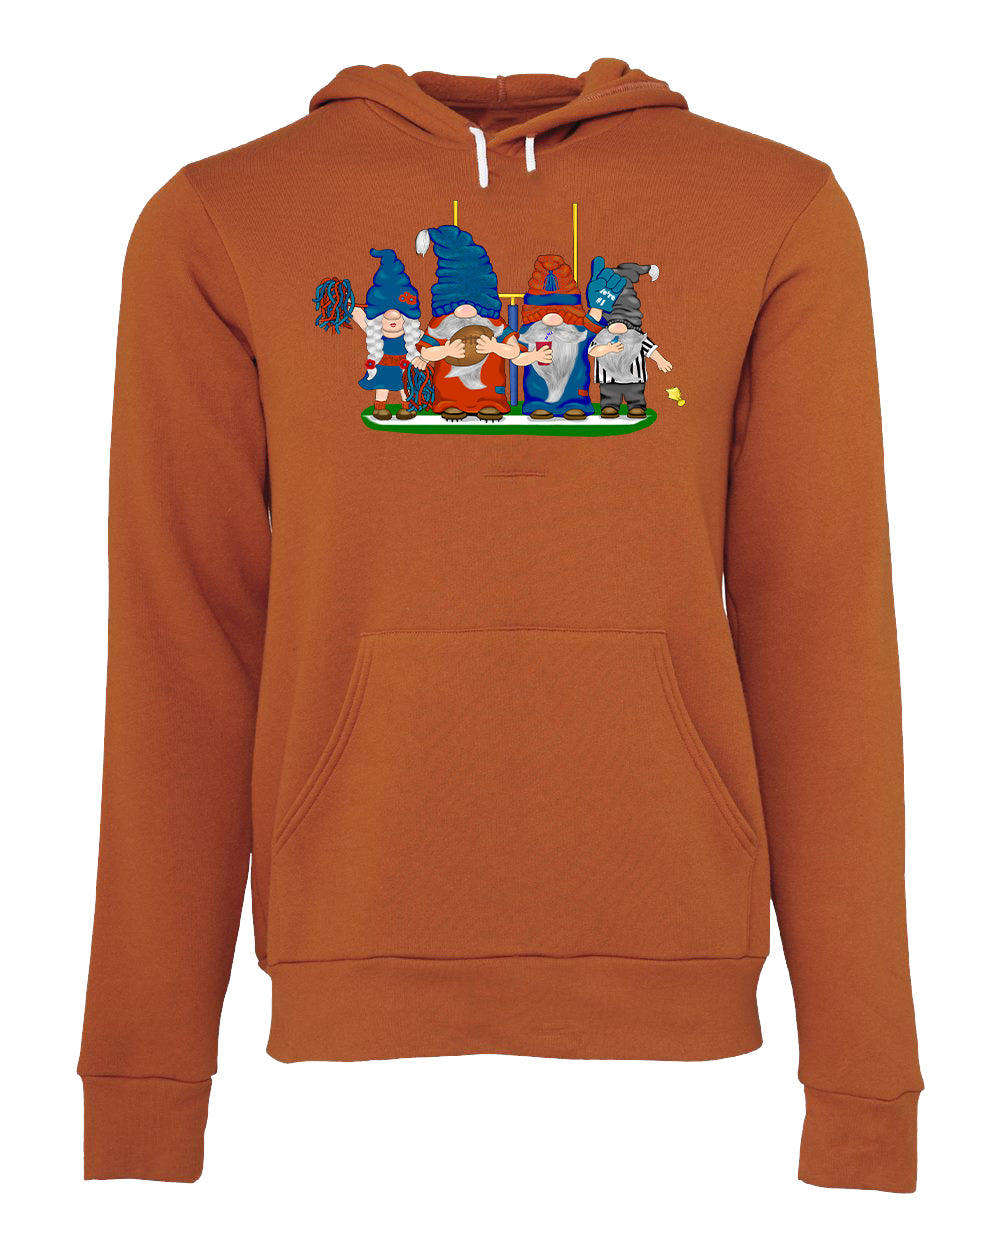 Orange & Blue Football Gnomes (similar to Chicago) on Unisex Hoodie